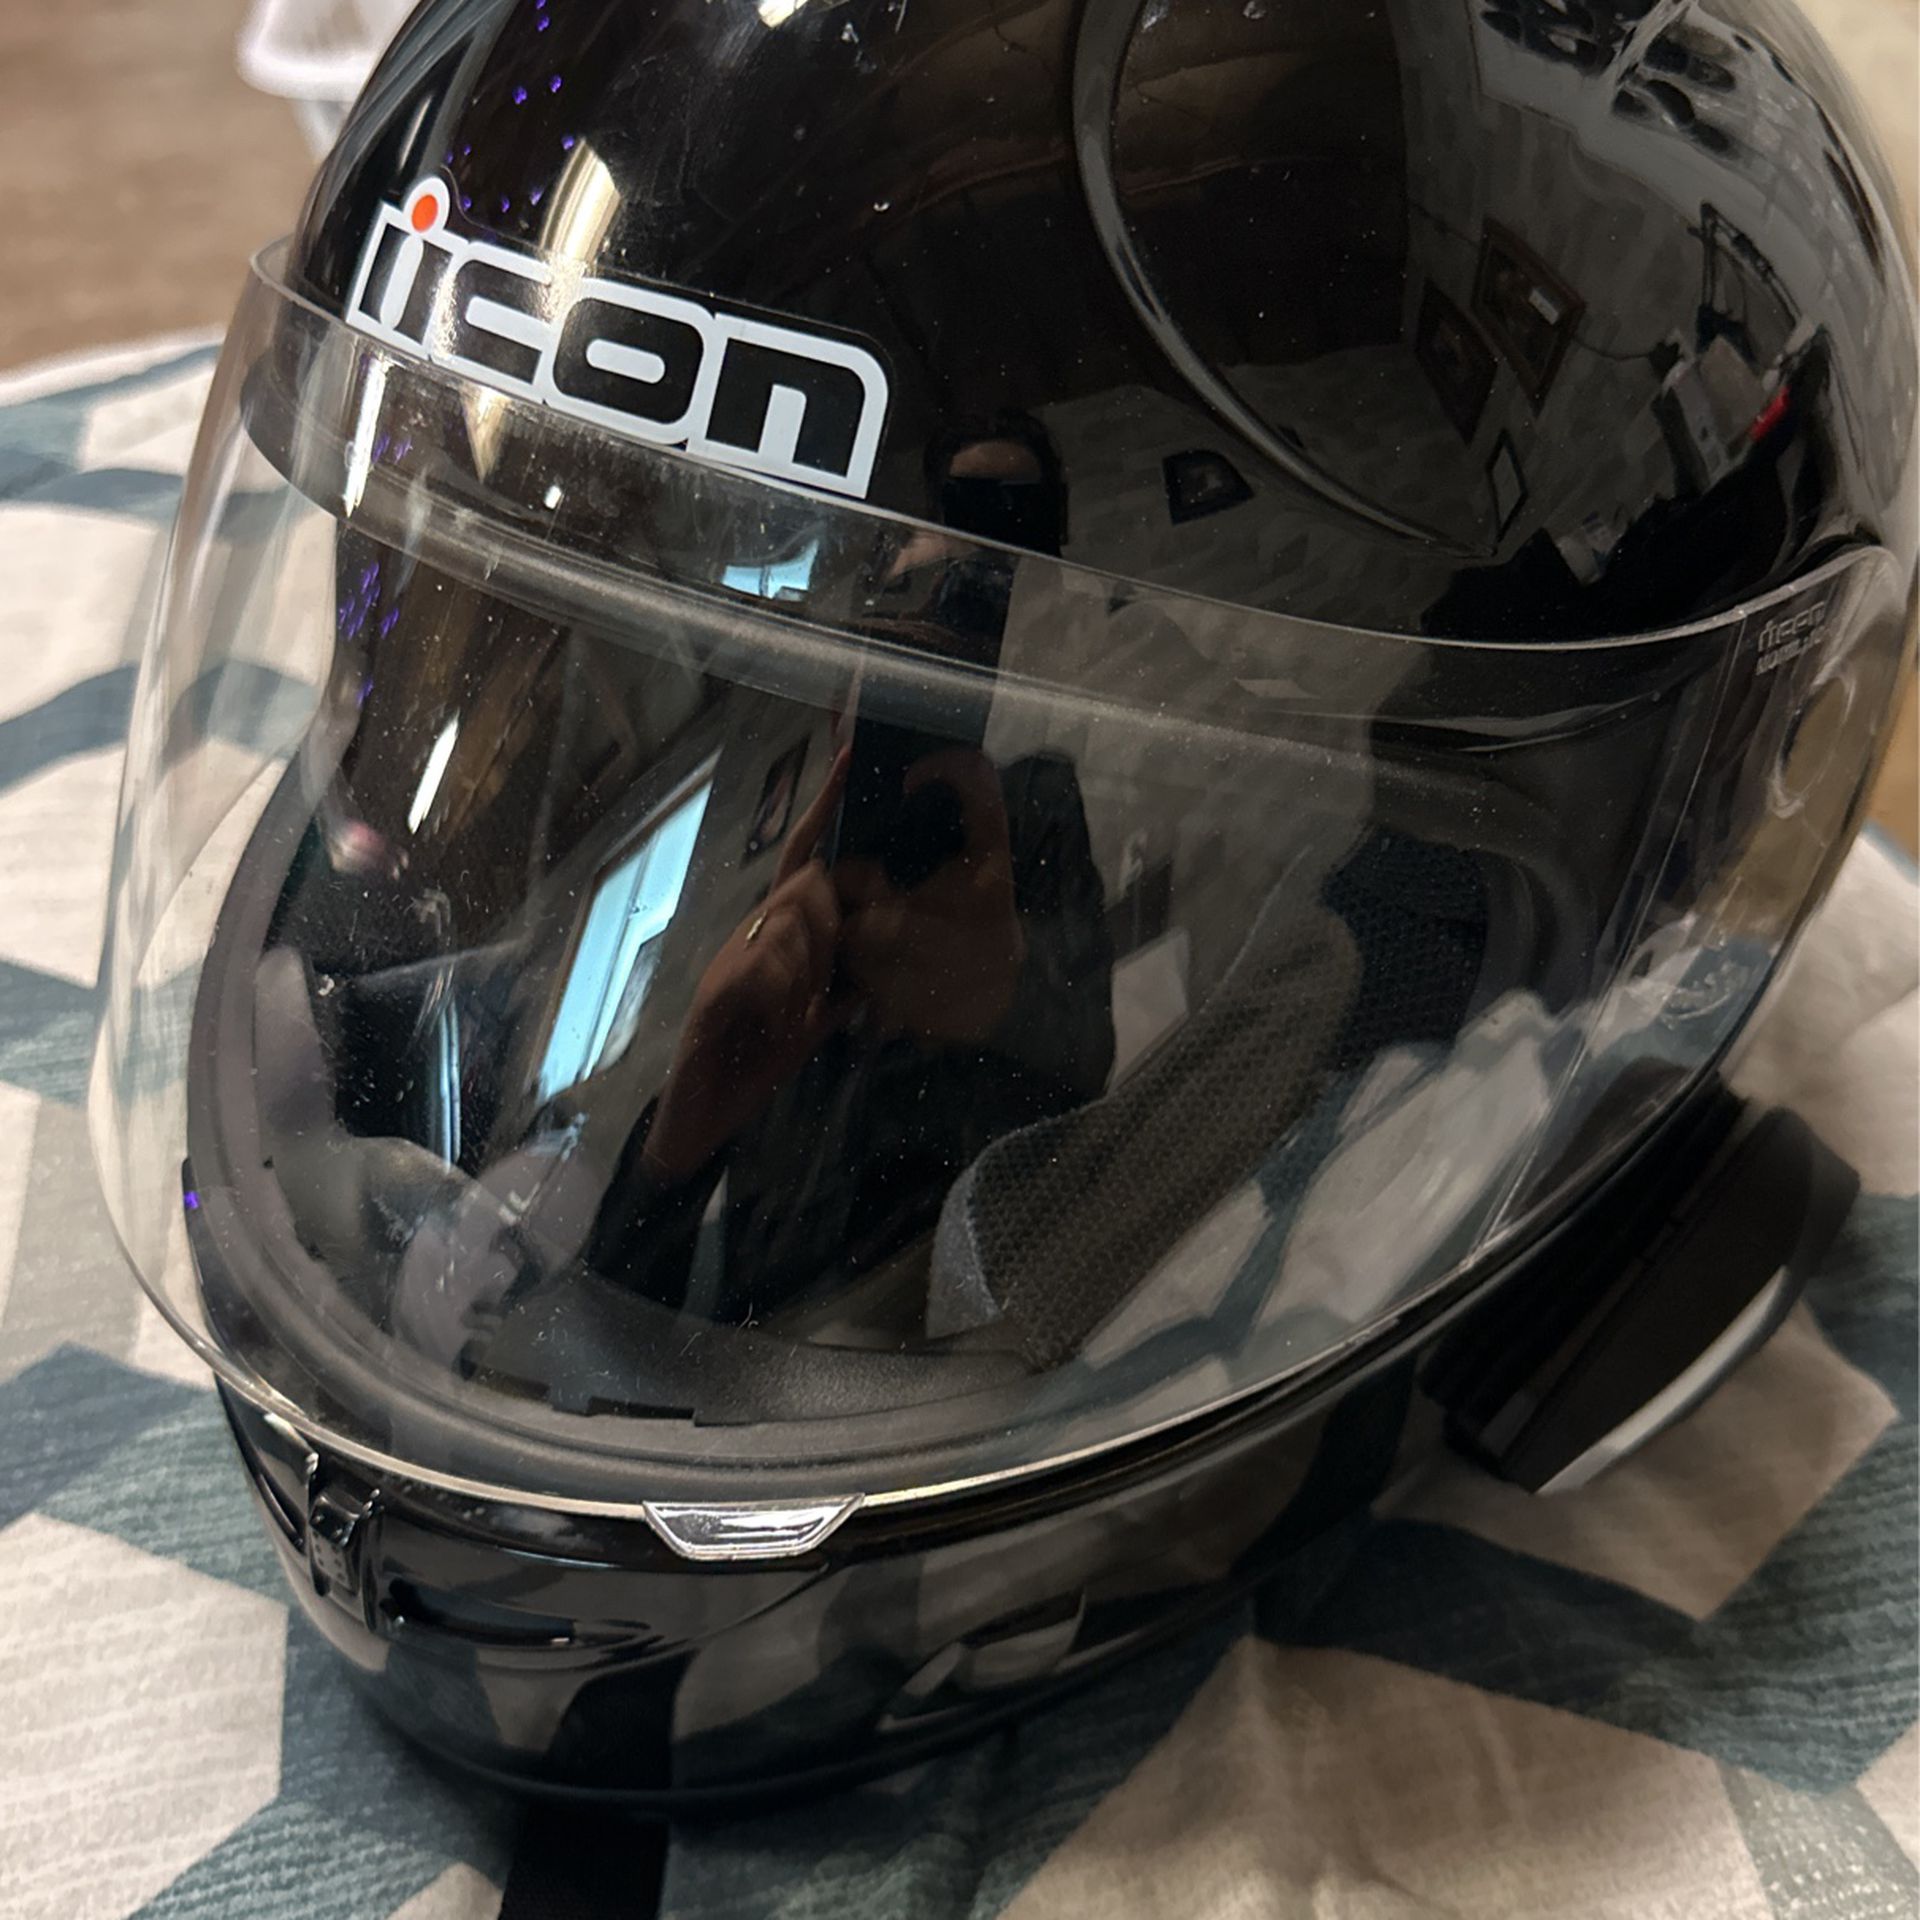 Motorcycle helmet Size M